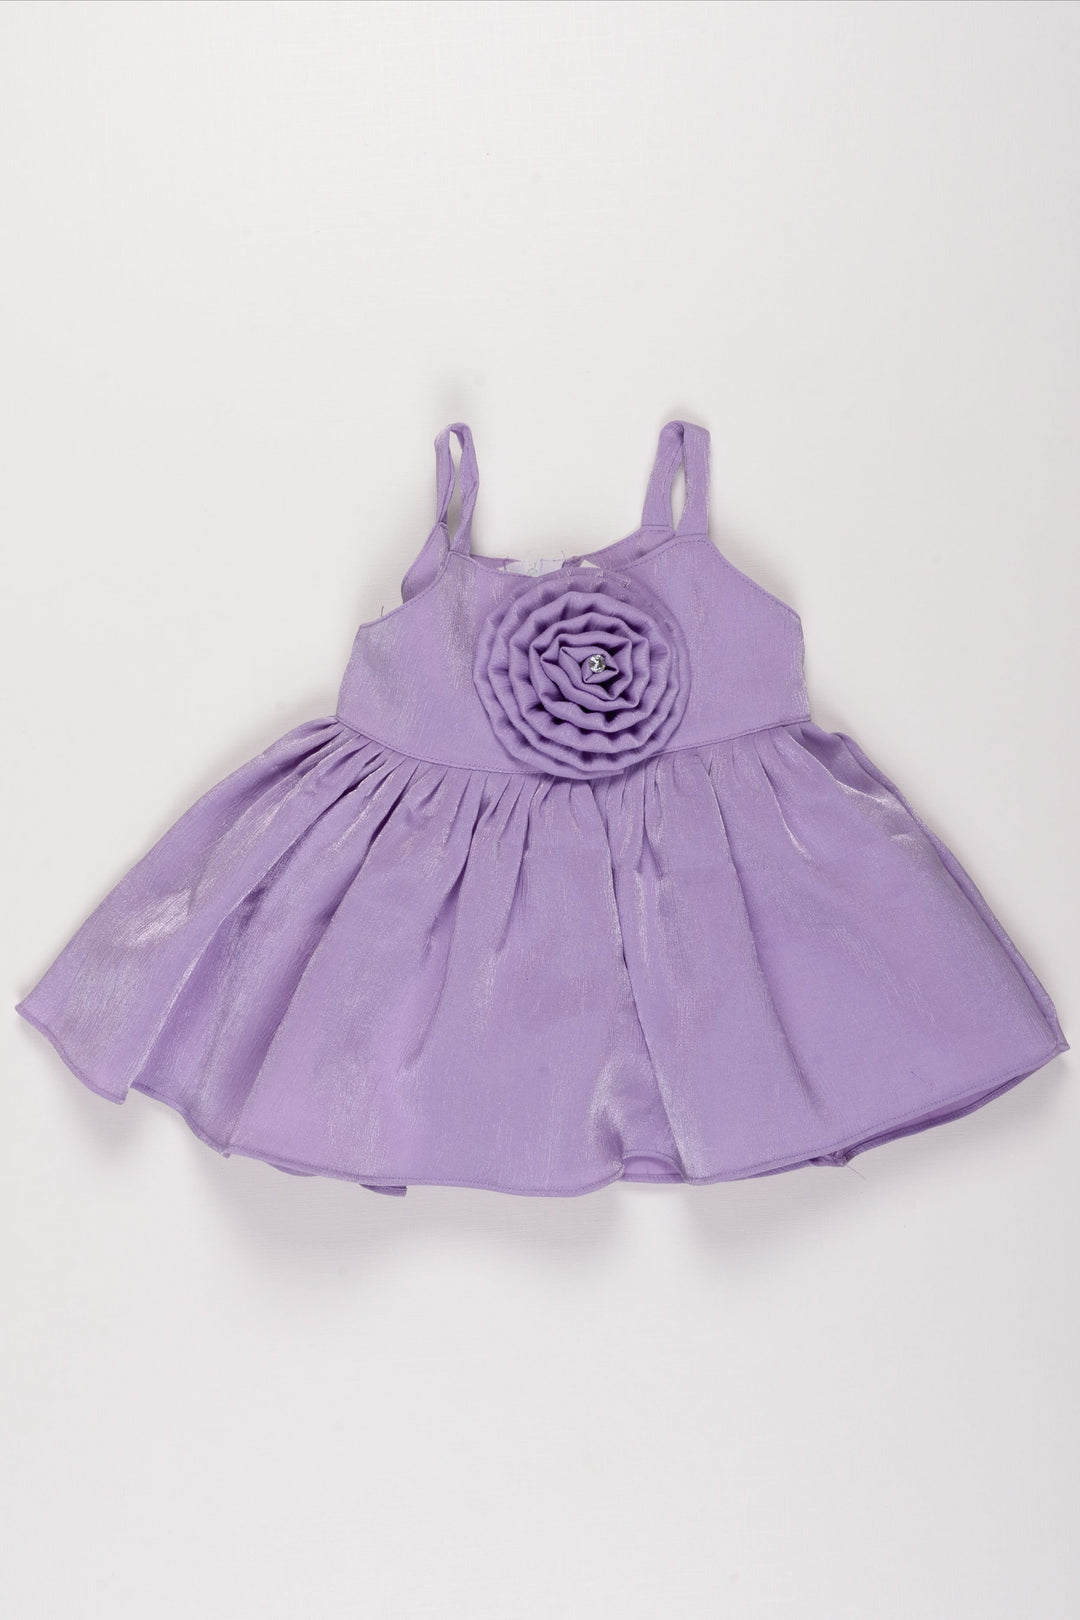 The Nesavu Baby Fancy Frock Infant Girl's Lavender Organza Frock with Elegant Rosette Detail Nesavu 10 (NB) / Purple BFJ501B-10 Lavender Rosette Organza Frock for Infants | Elegant Formal Dress | The Nesavu